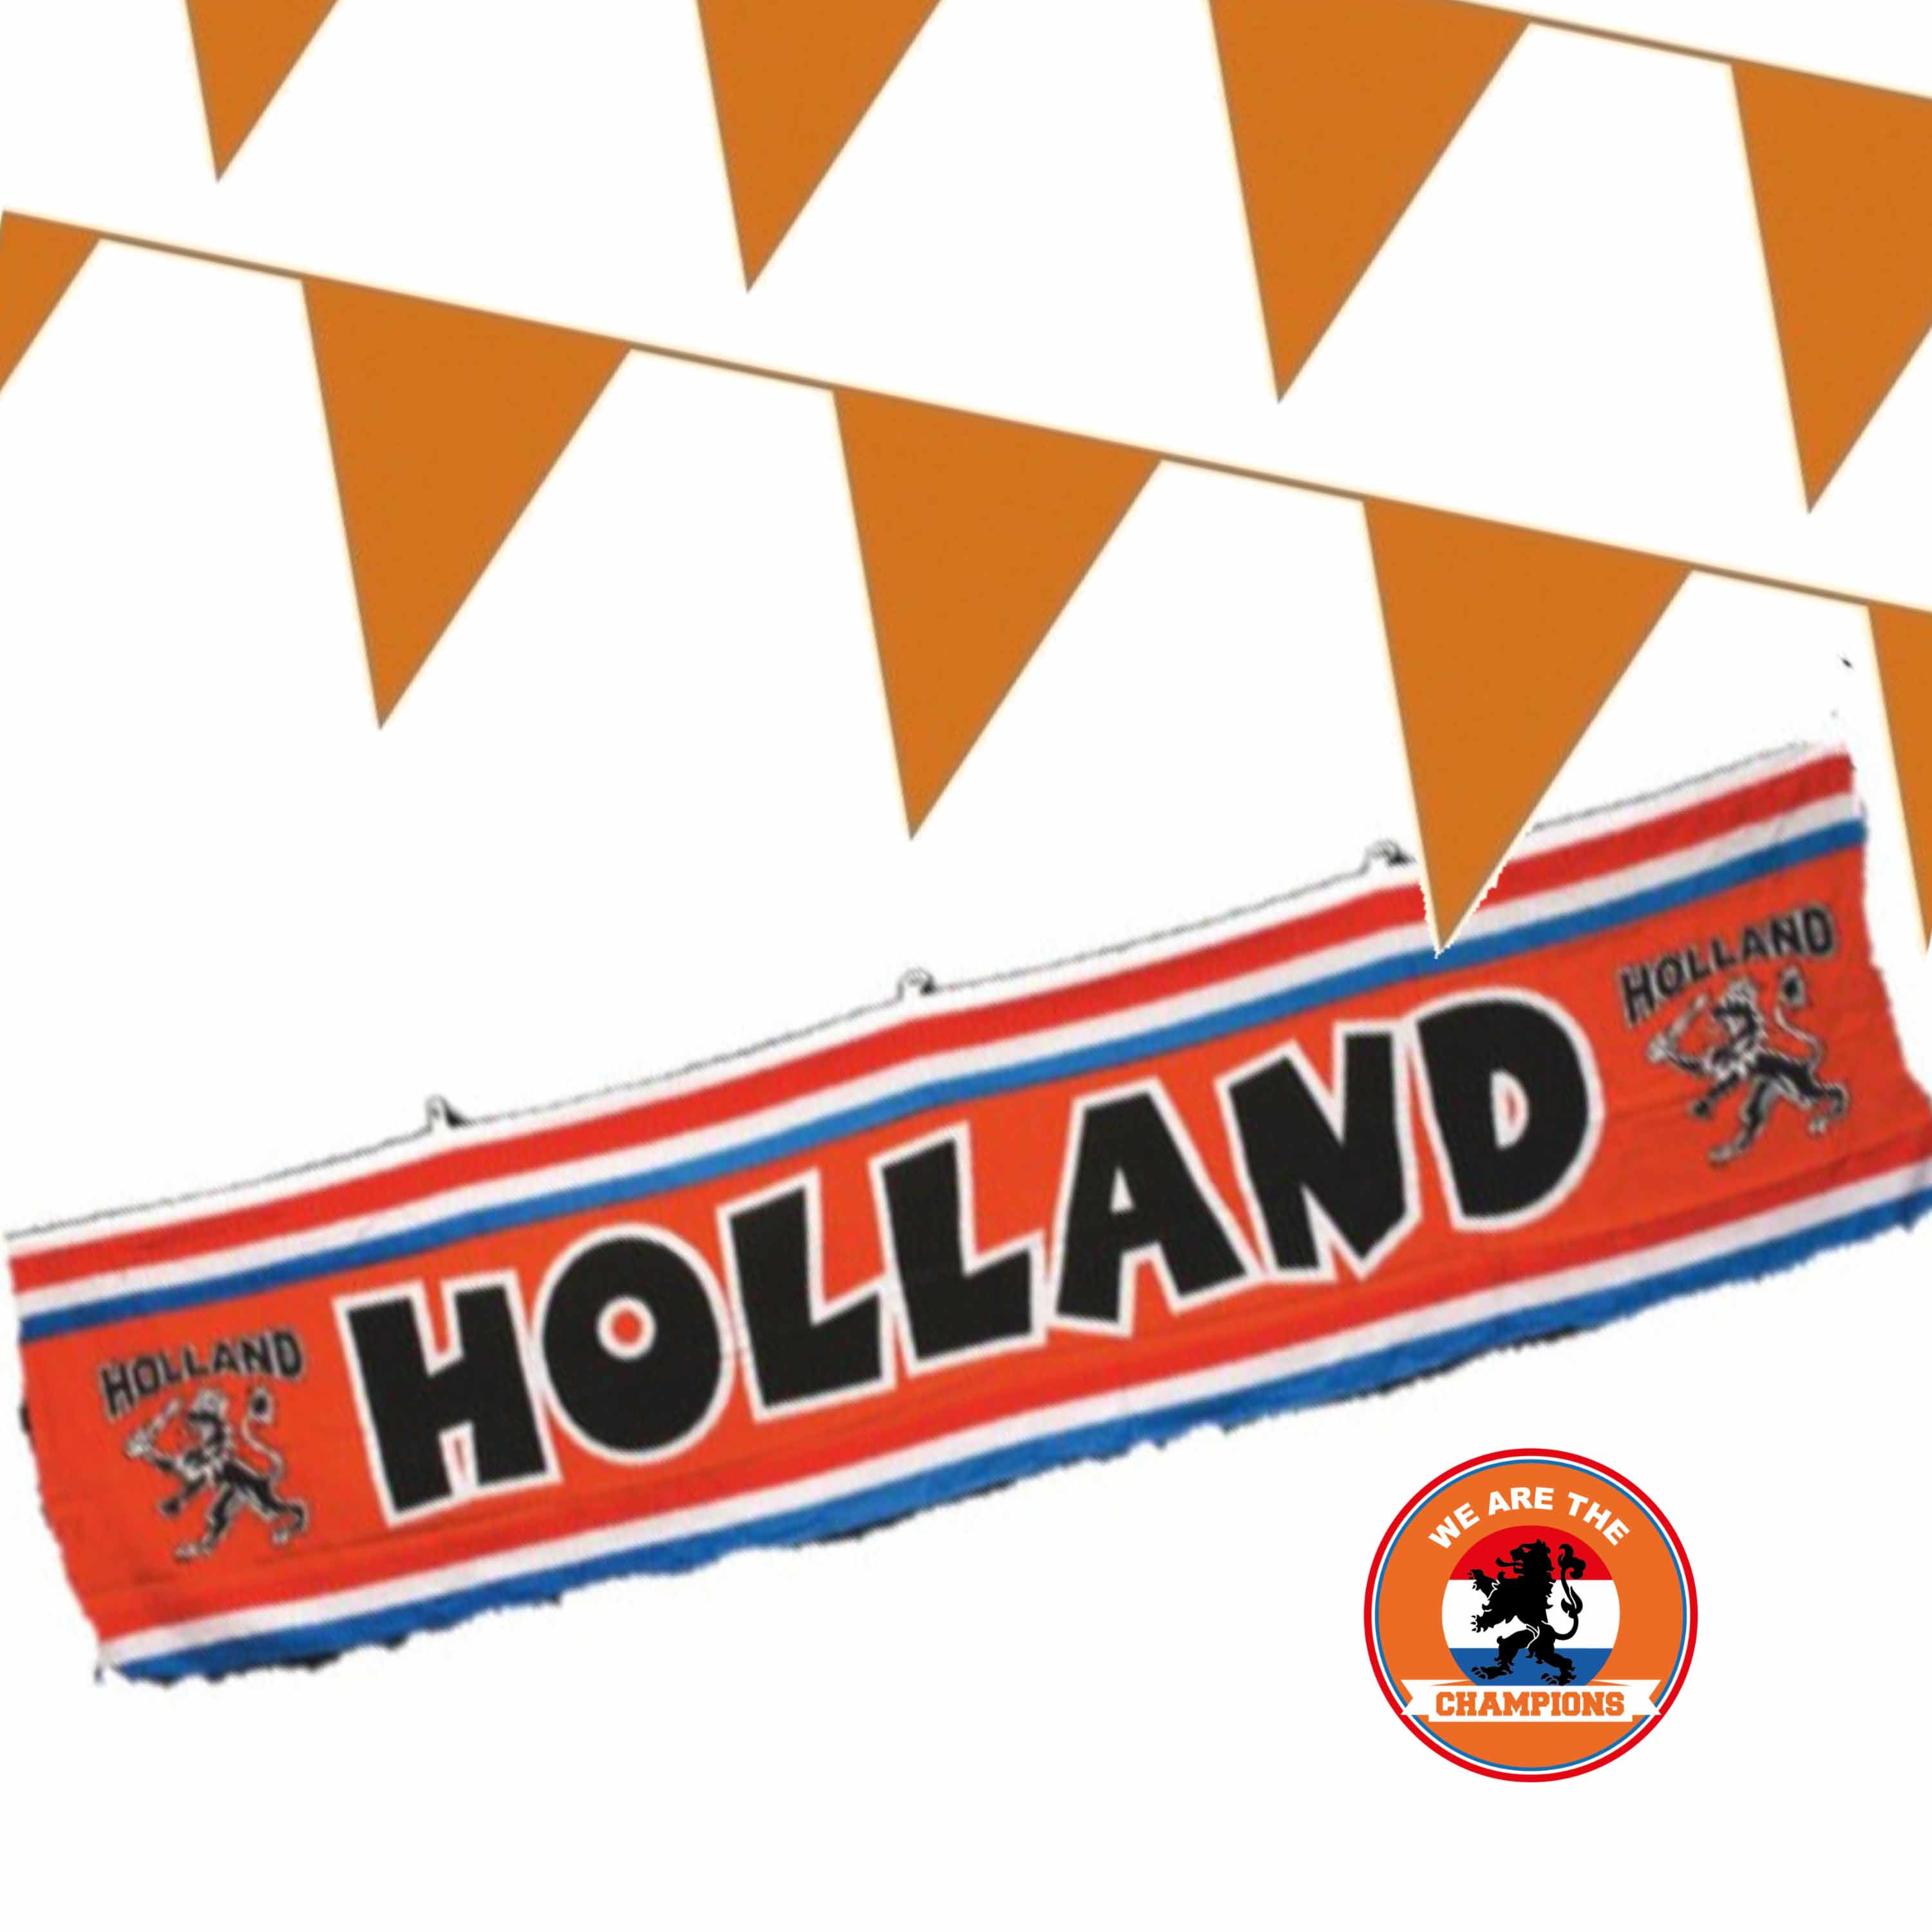 Ek oranje straat- huis versiering pakket met oa 1x Holland spandoek 70 x300 en 200 m vlaggenlijnen